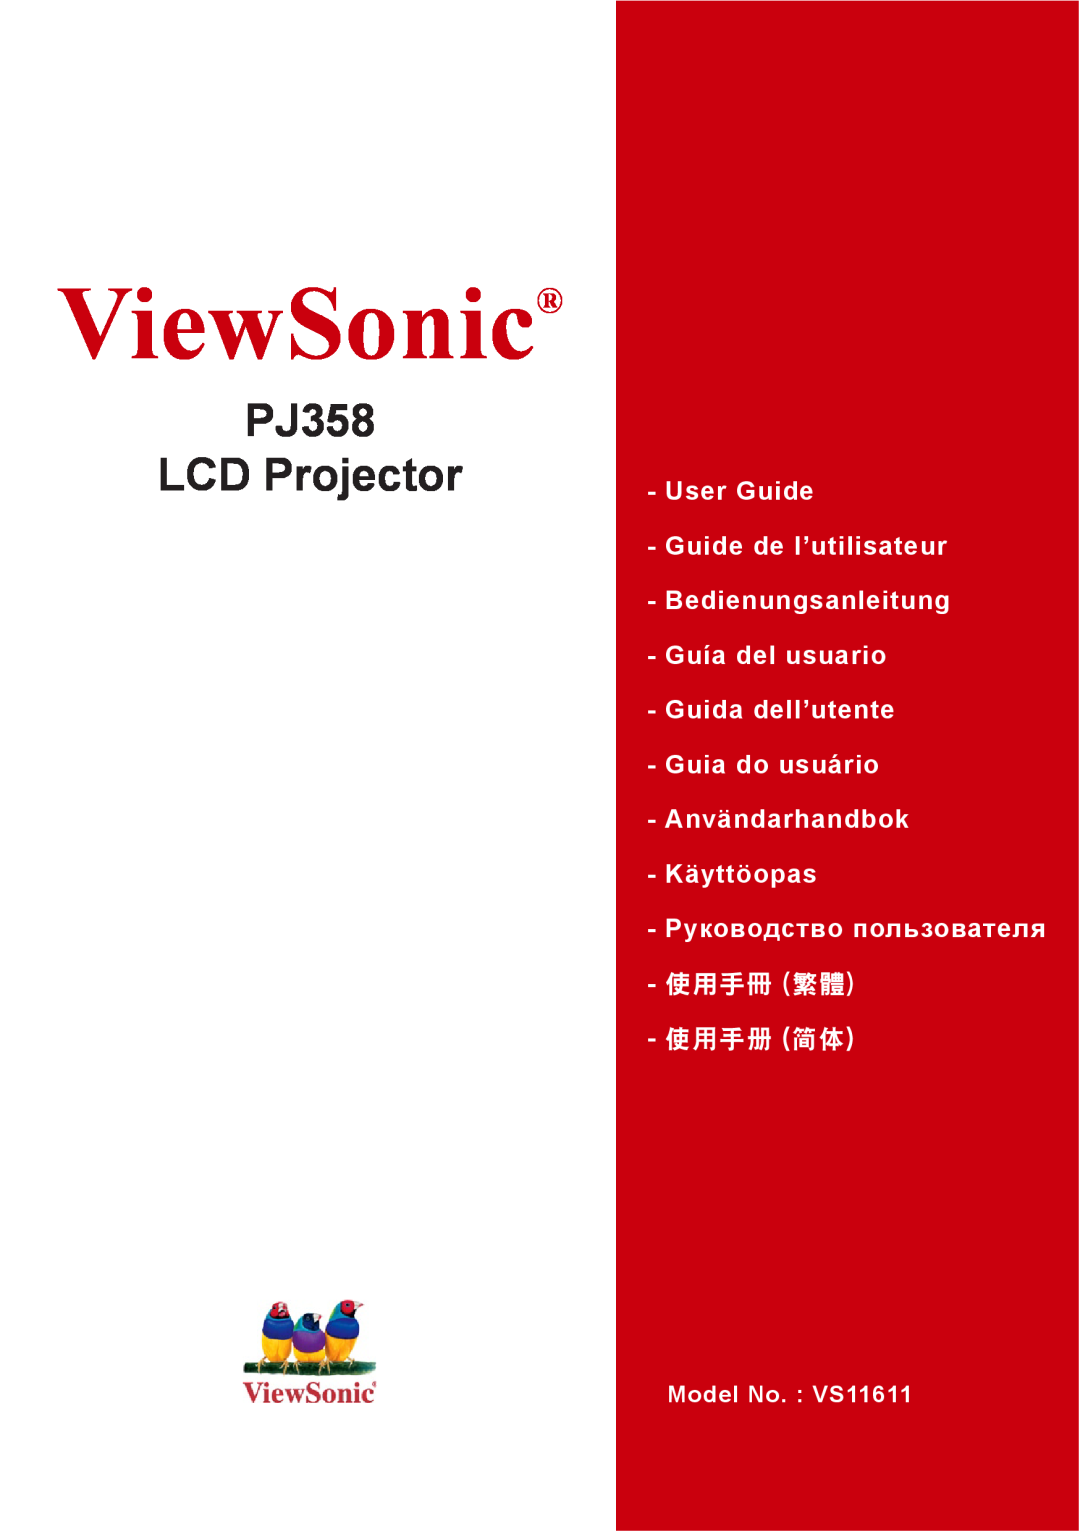 ViewSonic manual ViewSonic, PJ358 LCD Projector, User Guide Guide de l’utilisateur Bedienungsanleitung, 使用手冊 繁體 使用手冊 簡體 